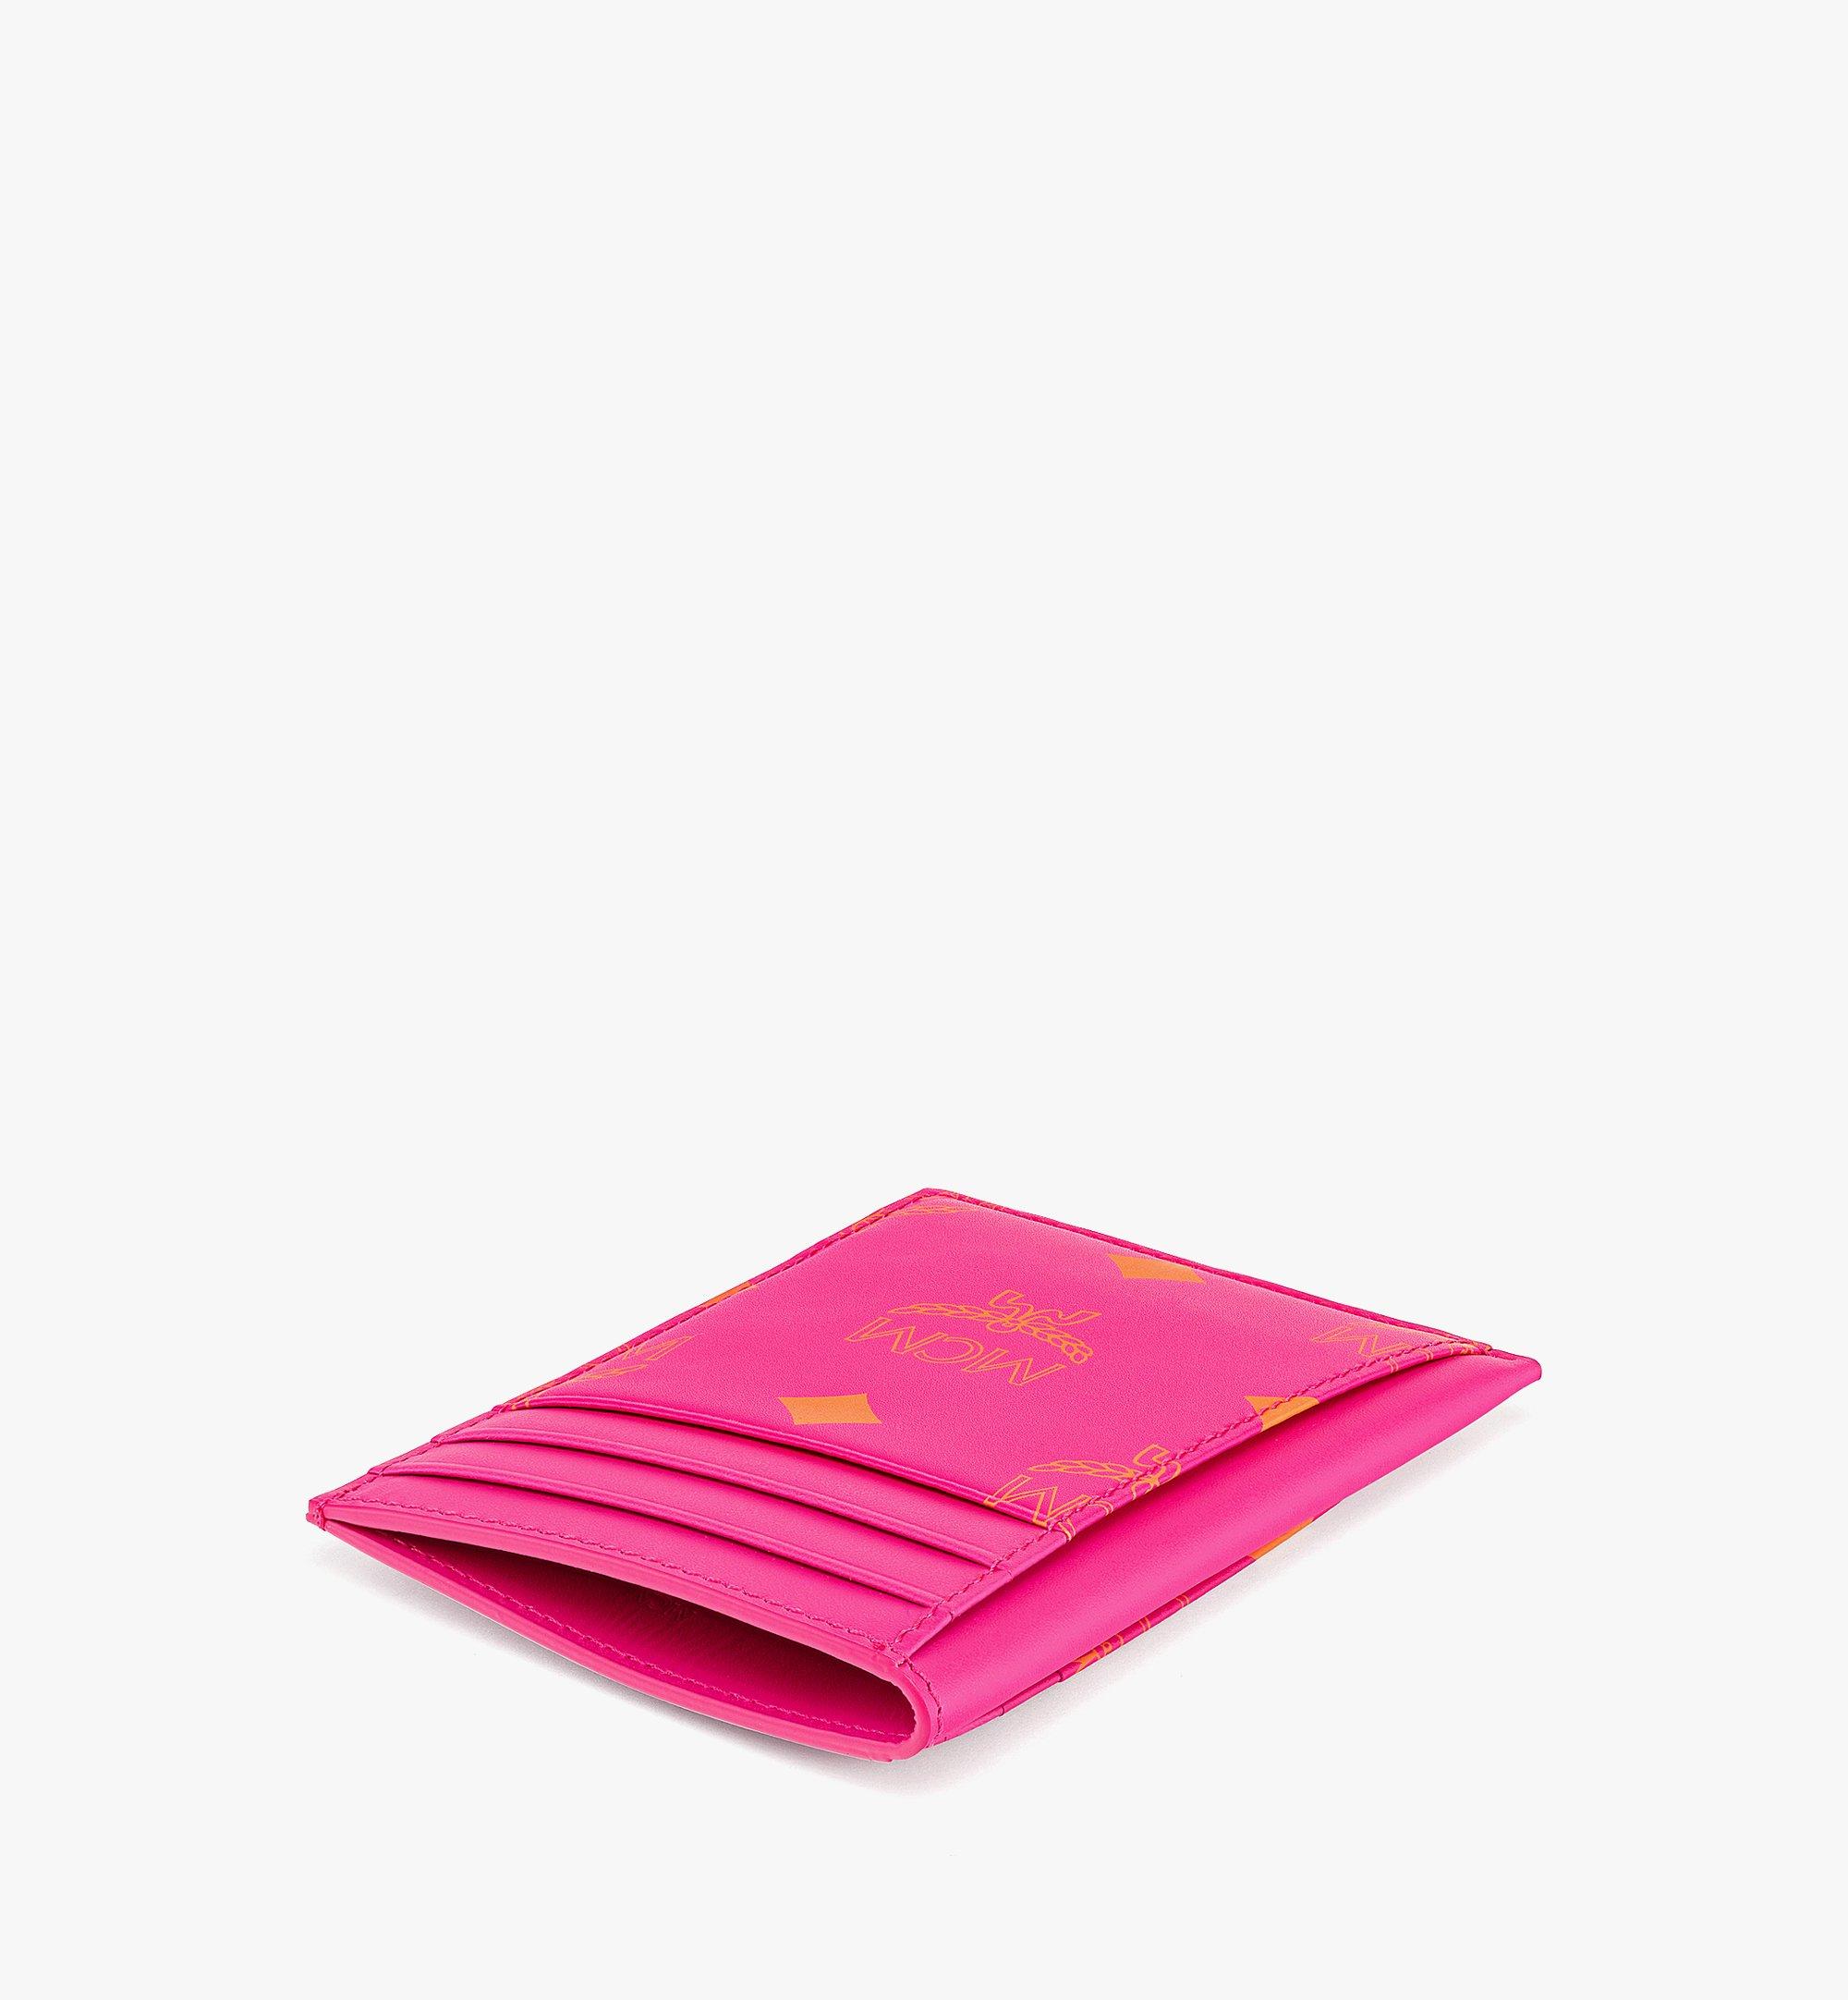 MCM N/S Card Case in Color Splash Logo Leather Pink MXACSSX01QR001 Alternate View 1